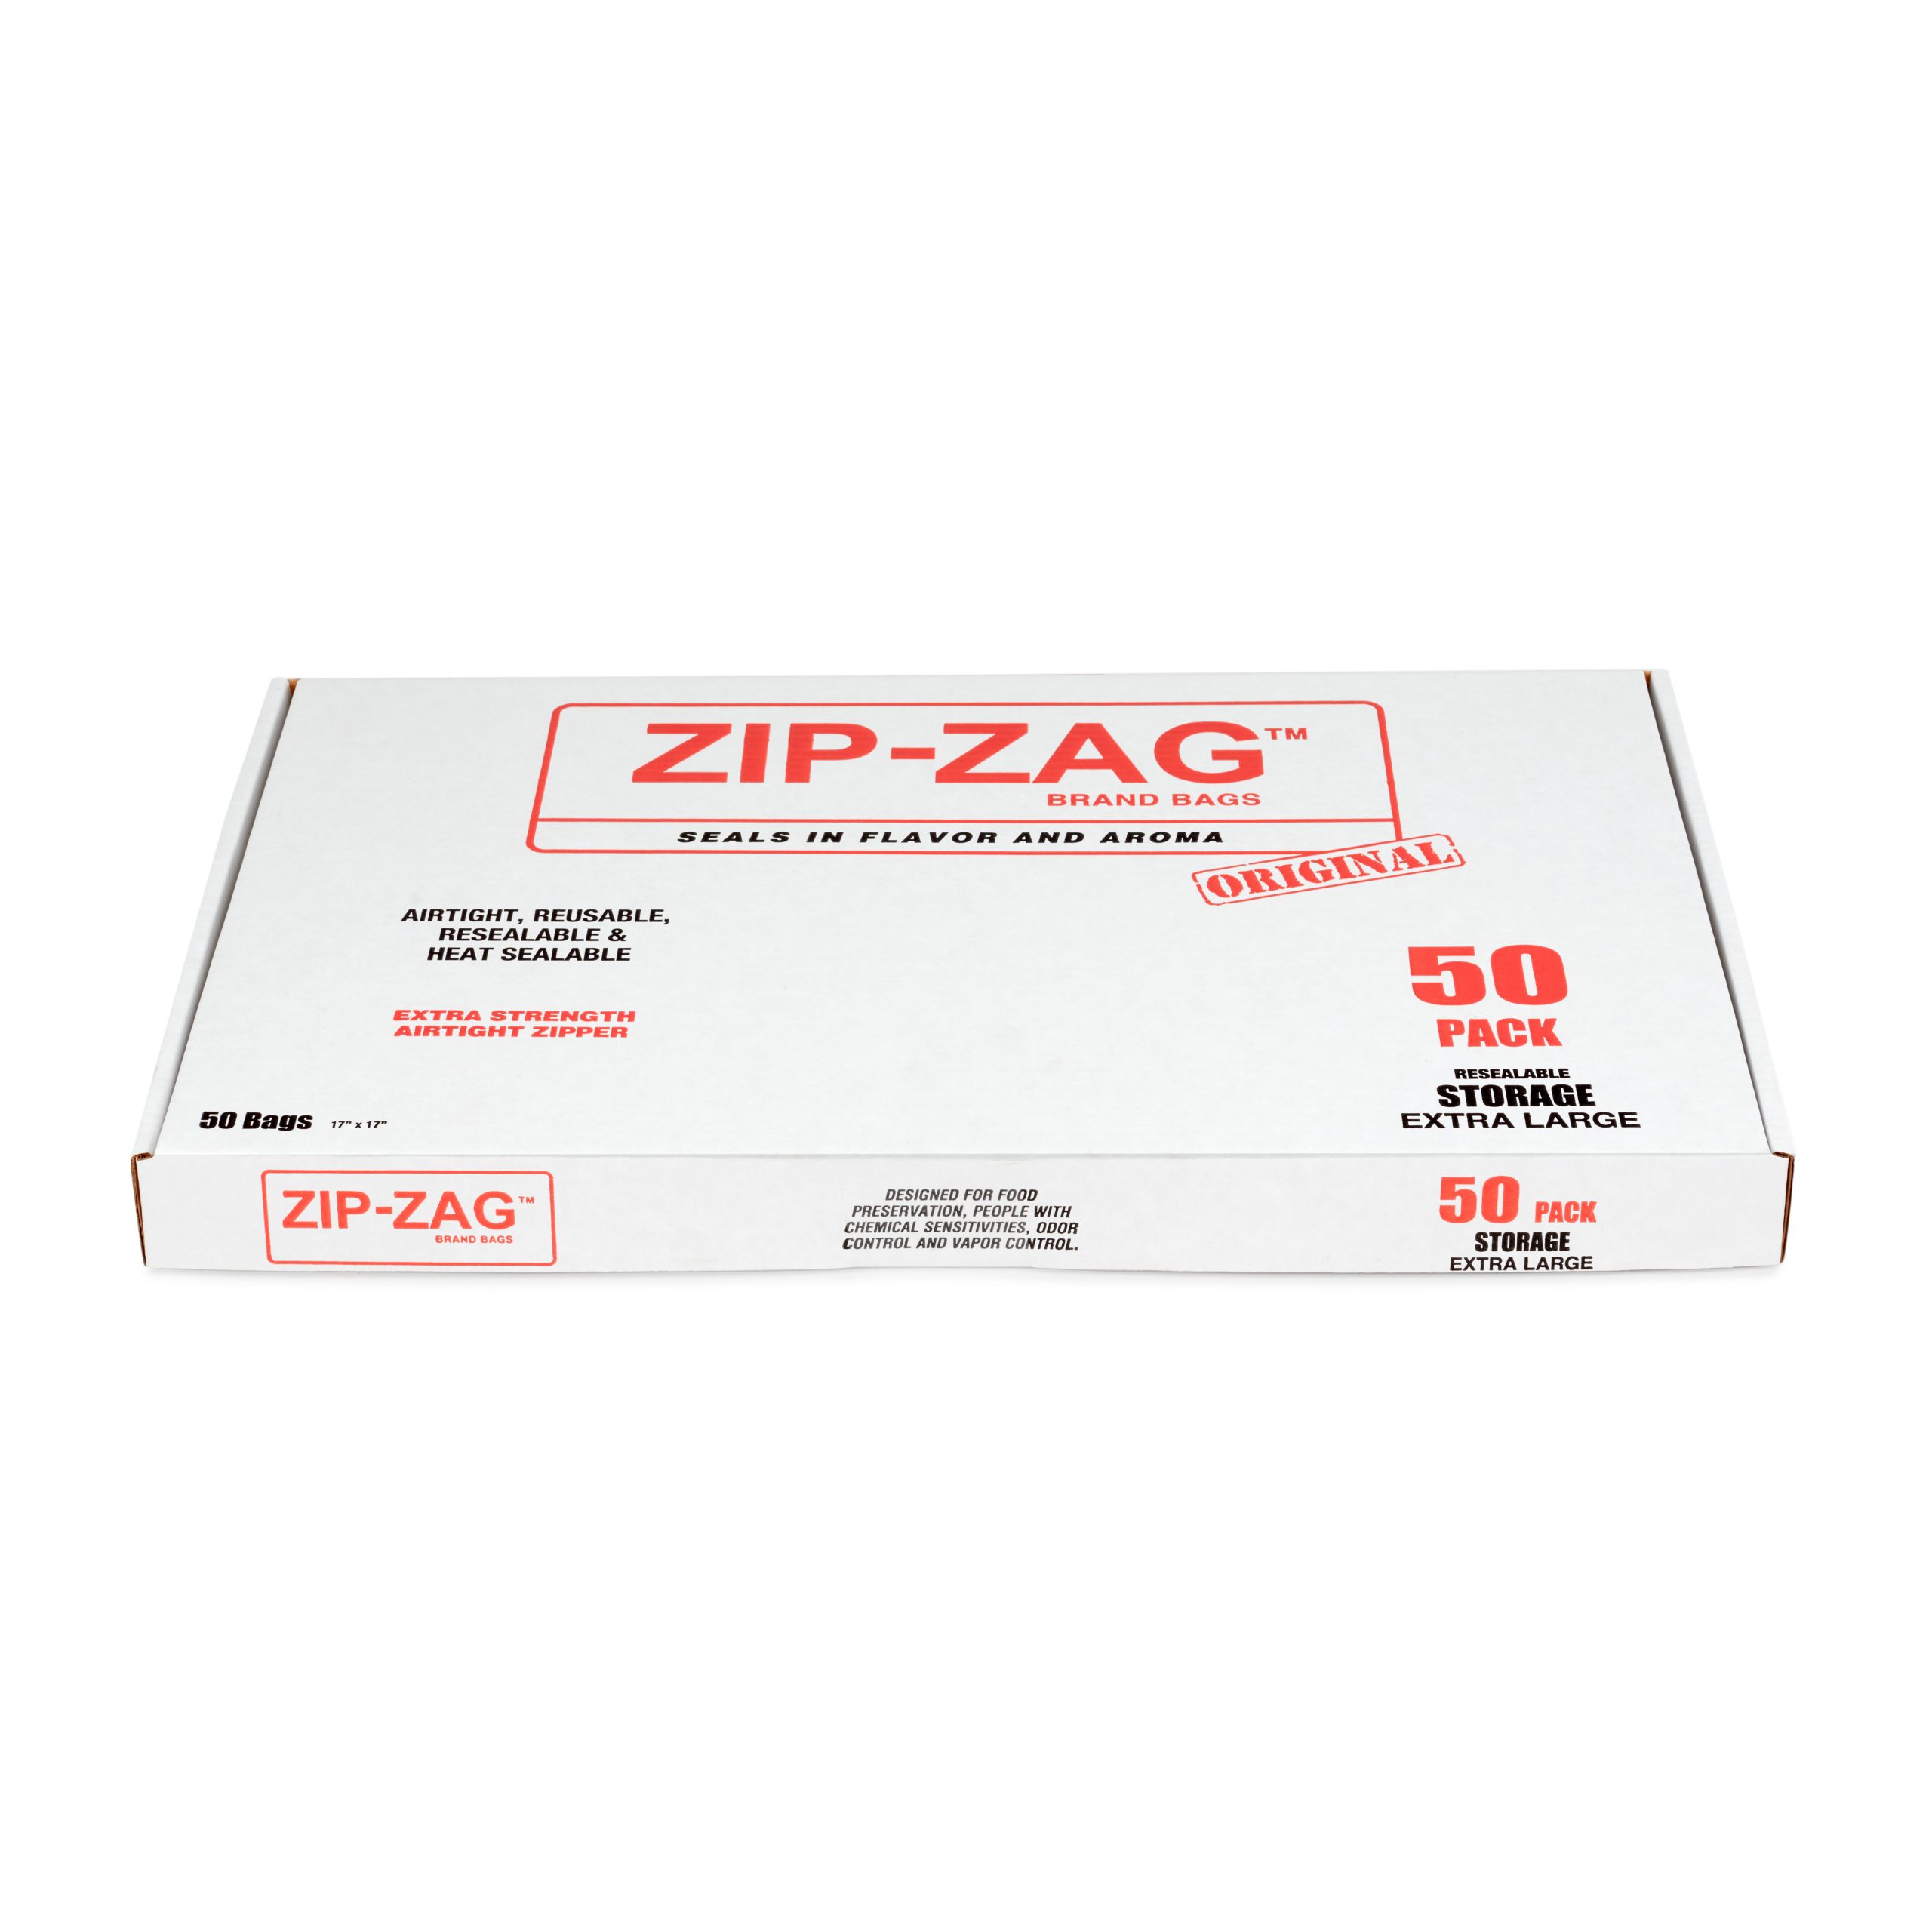 Zip Zag Bag Large 50 pack (1/2 lb) Smell Proof Reusable Bag